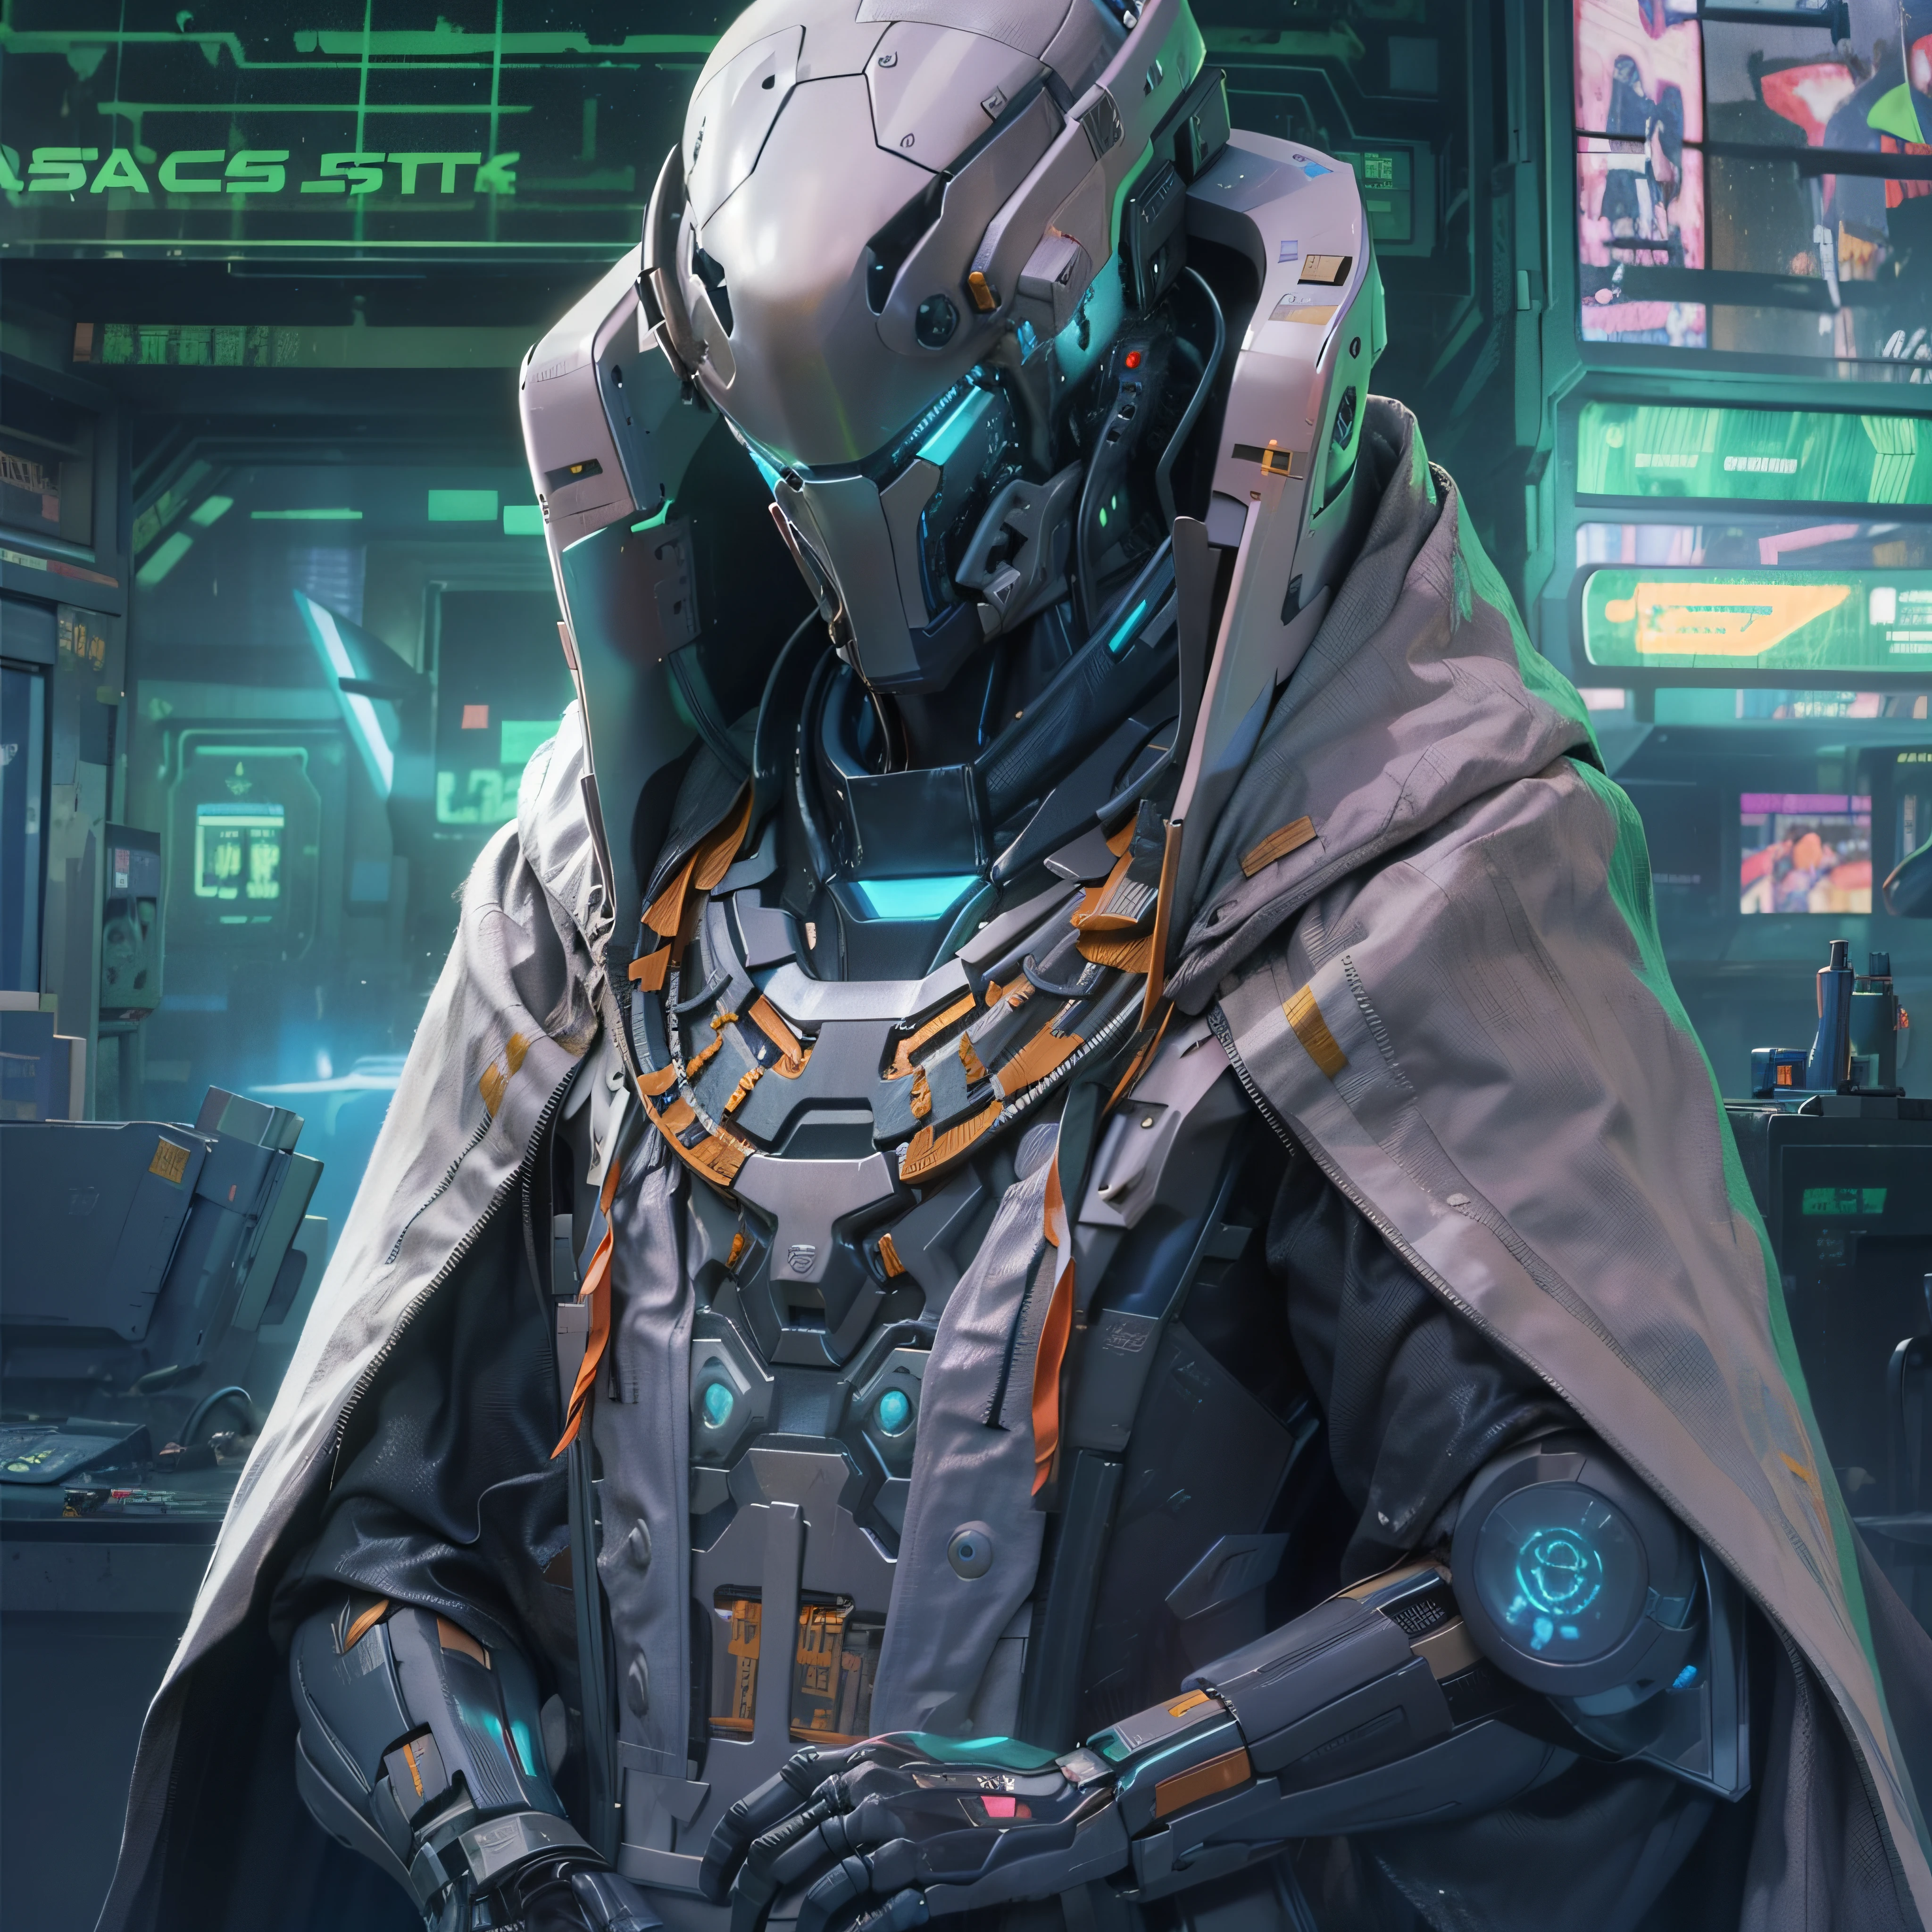 cyberfusion,Shinsengumi Haori assassin robot cyborg wearing robes cape,elite corporate security, (((cyberpunk alien spacestation)))